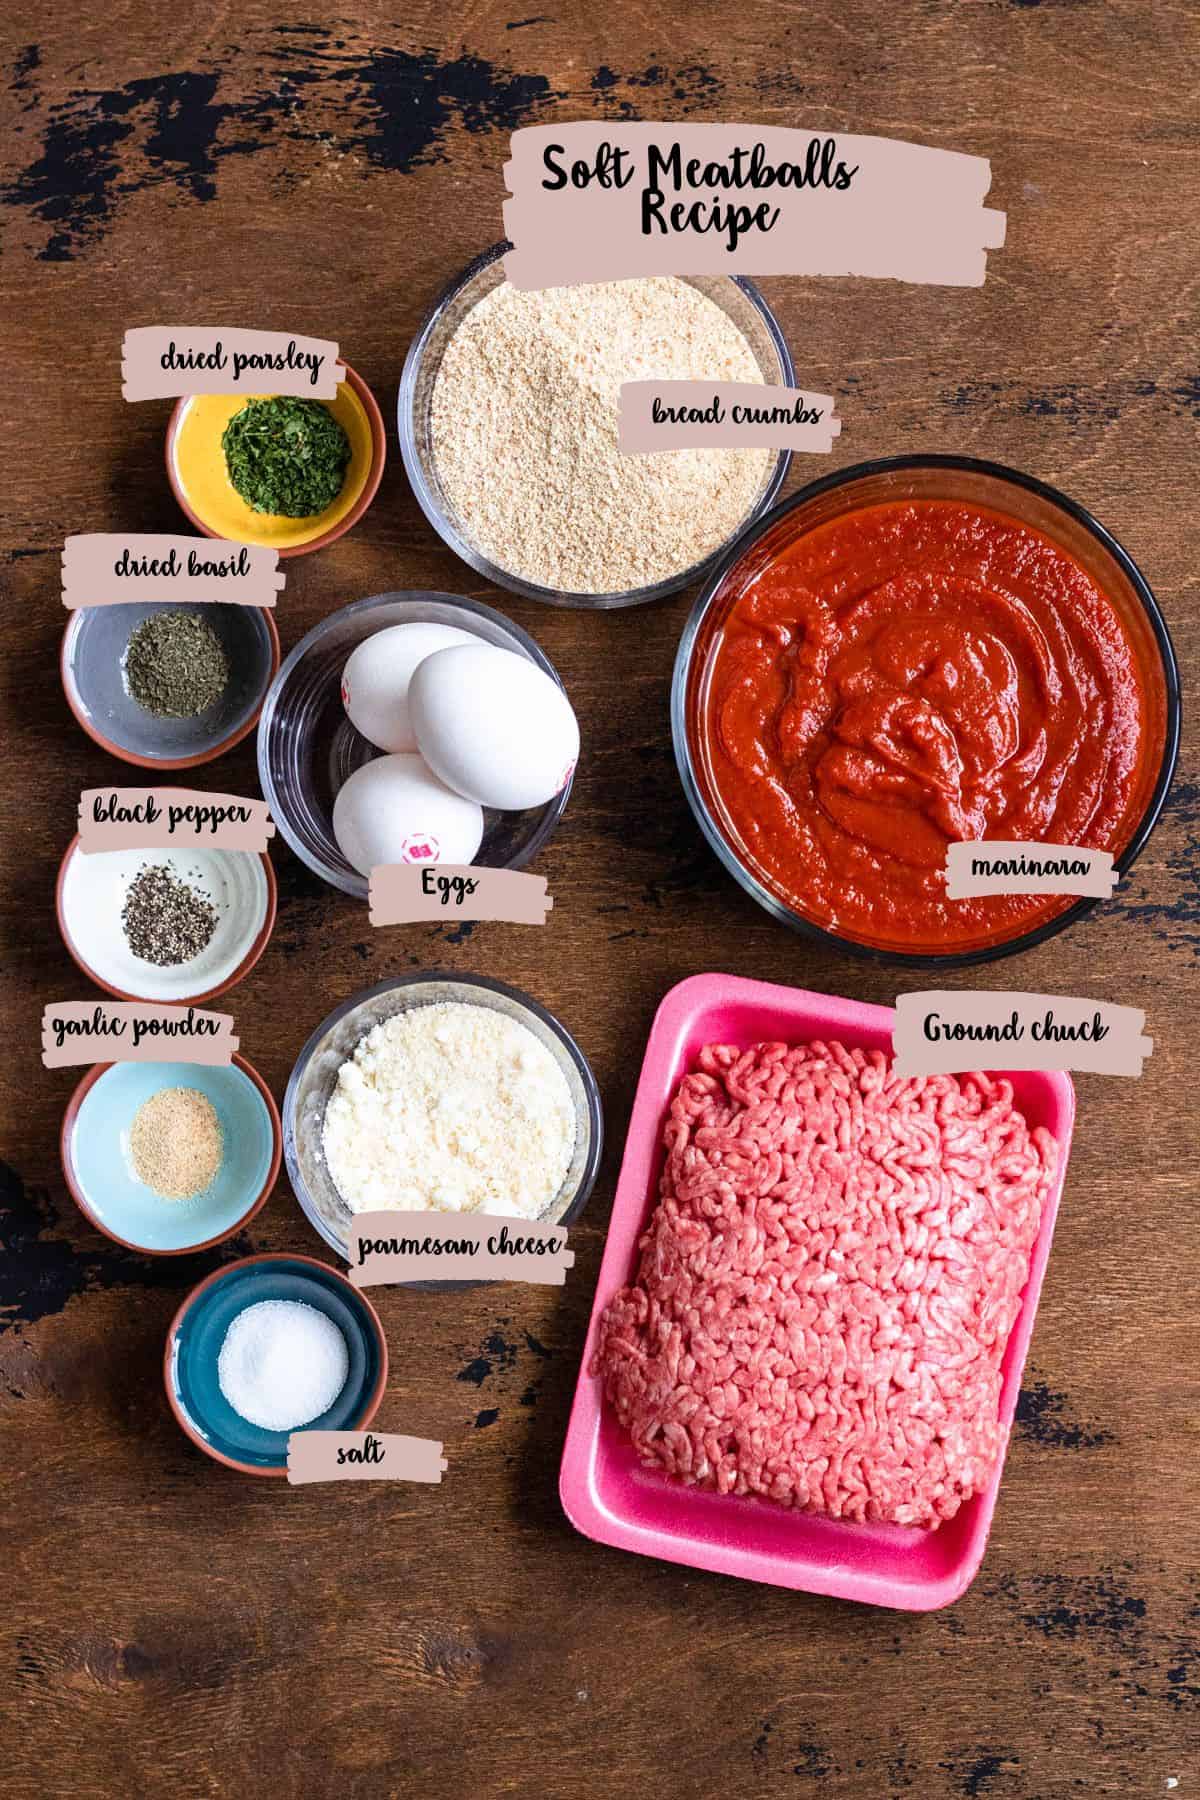 Ingredients needed to prepare soft meatballs recipe. 